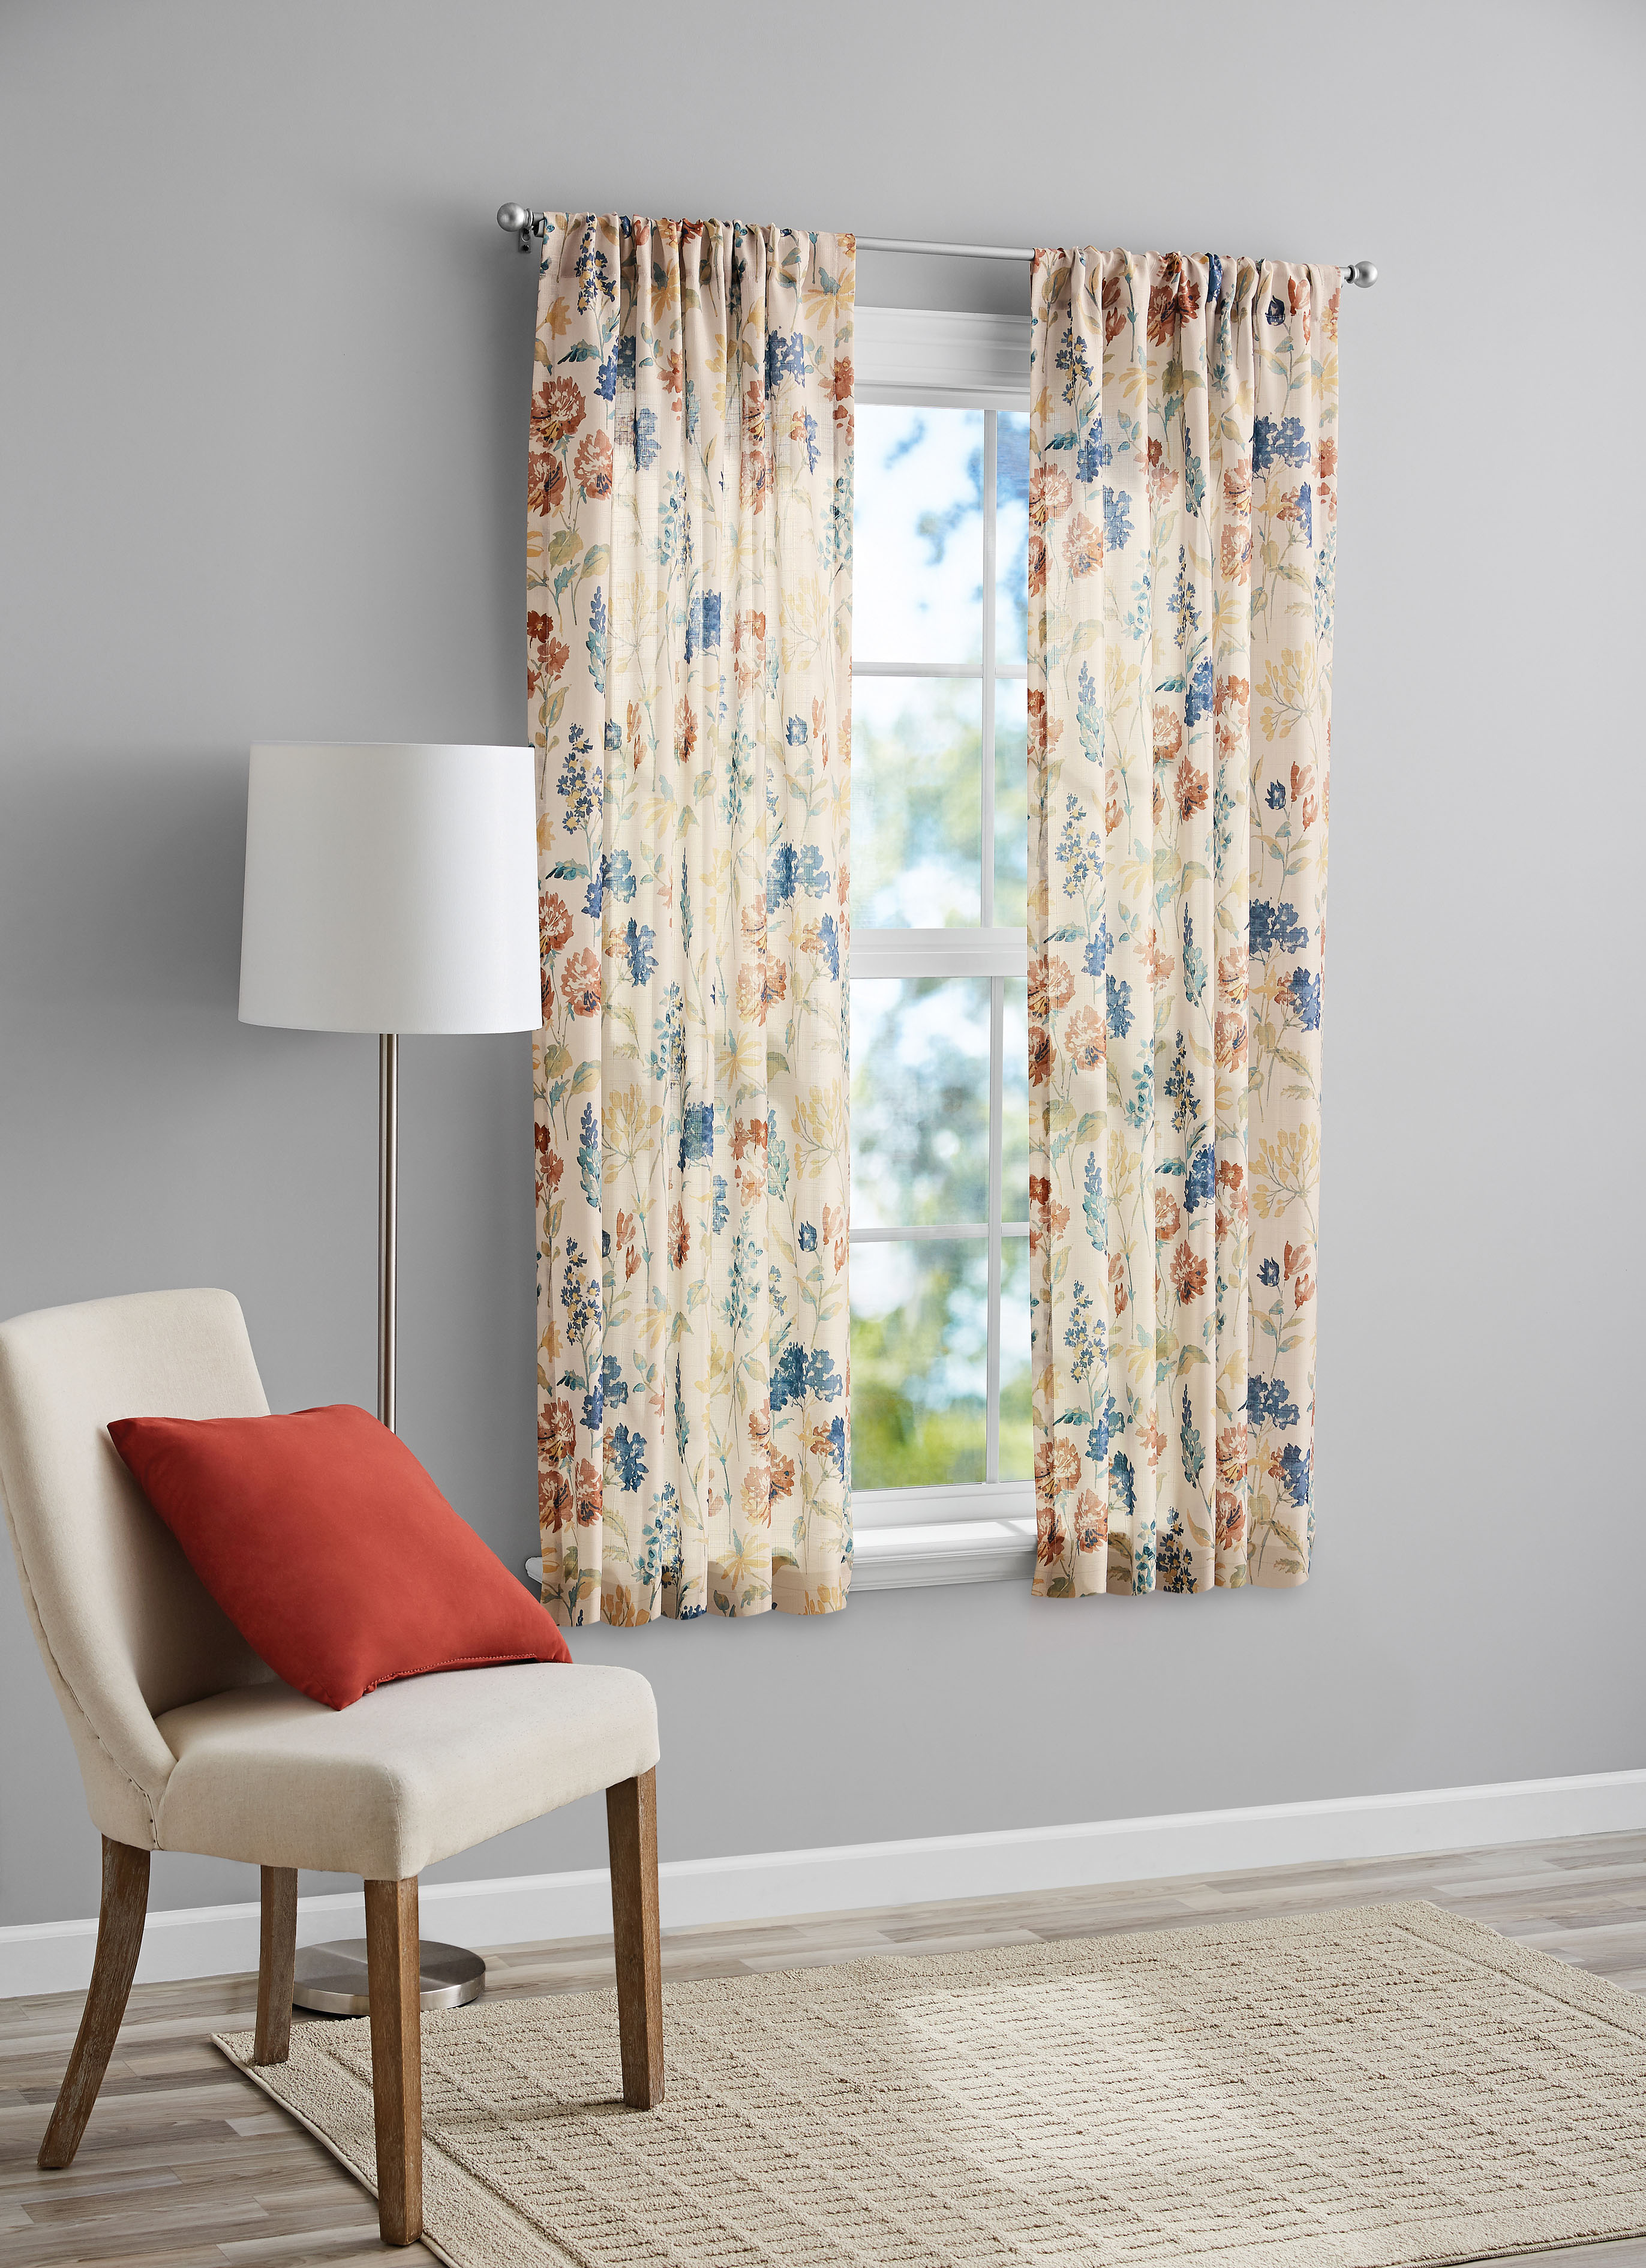 Mainstays Tille Floral Spring Print Light Filtering Rod Pocket Curtain Panel Pair, Set of 2, Beige, 37 x 63 - image 1 of 8